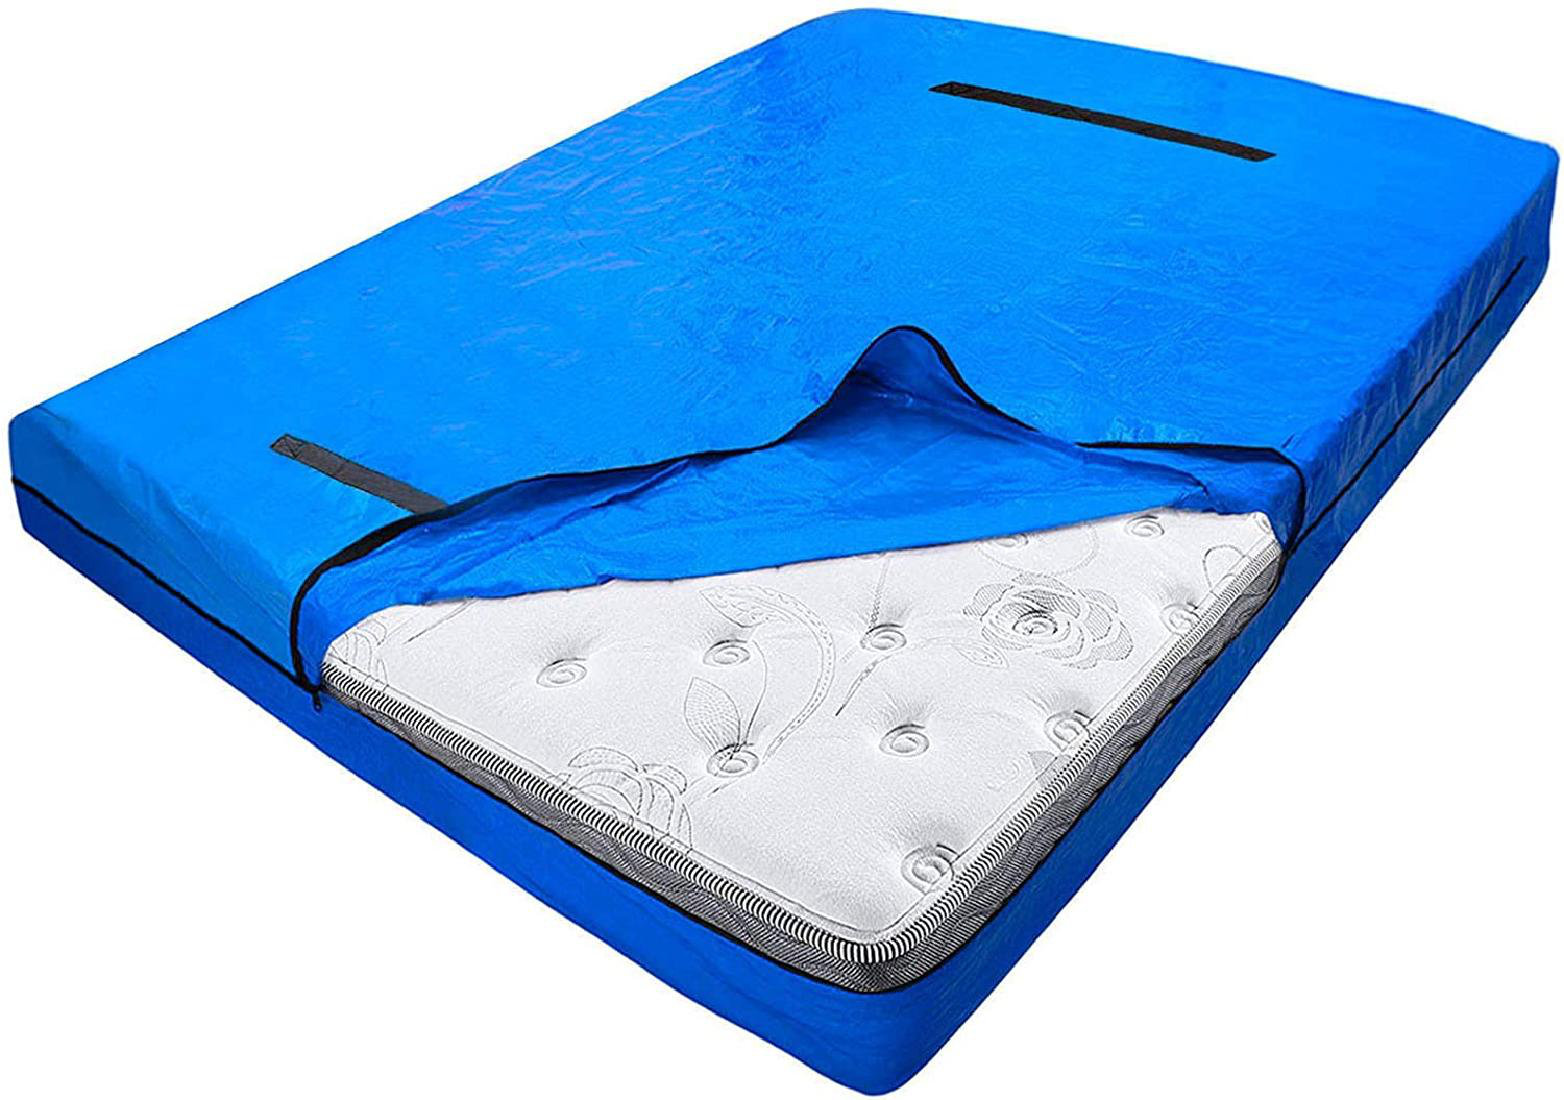 waterproof zippered mattress protector